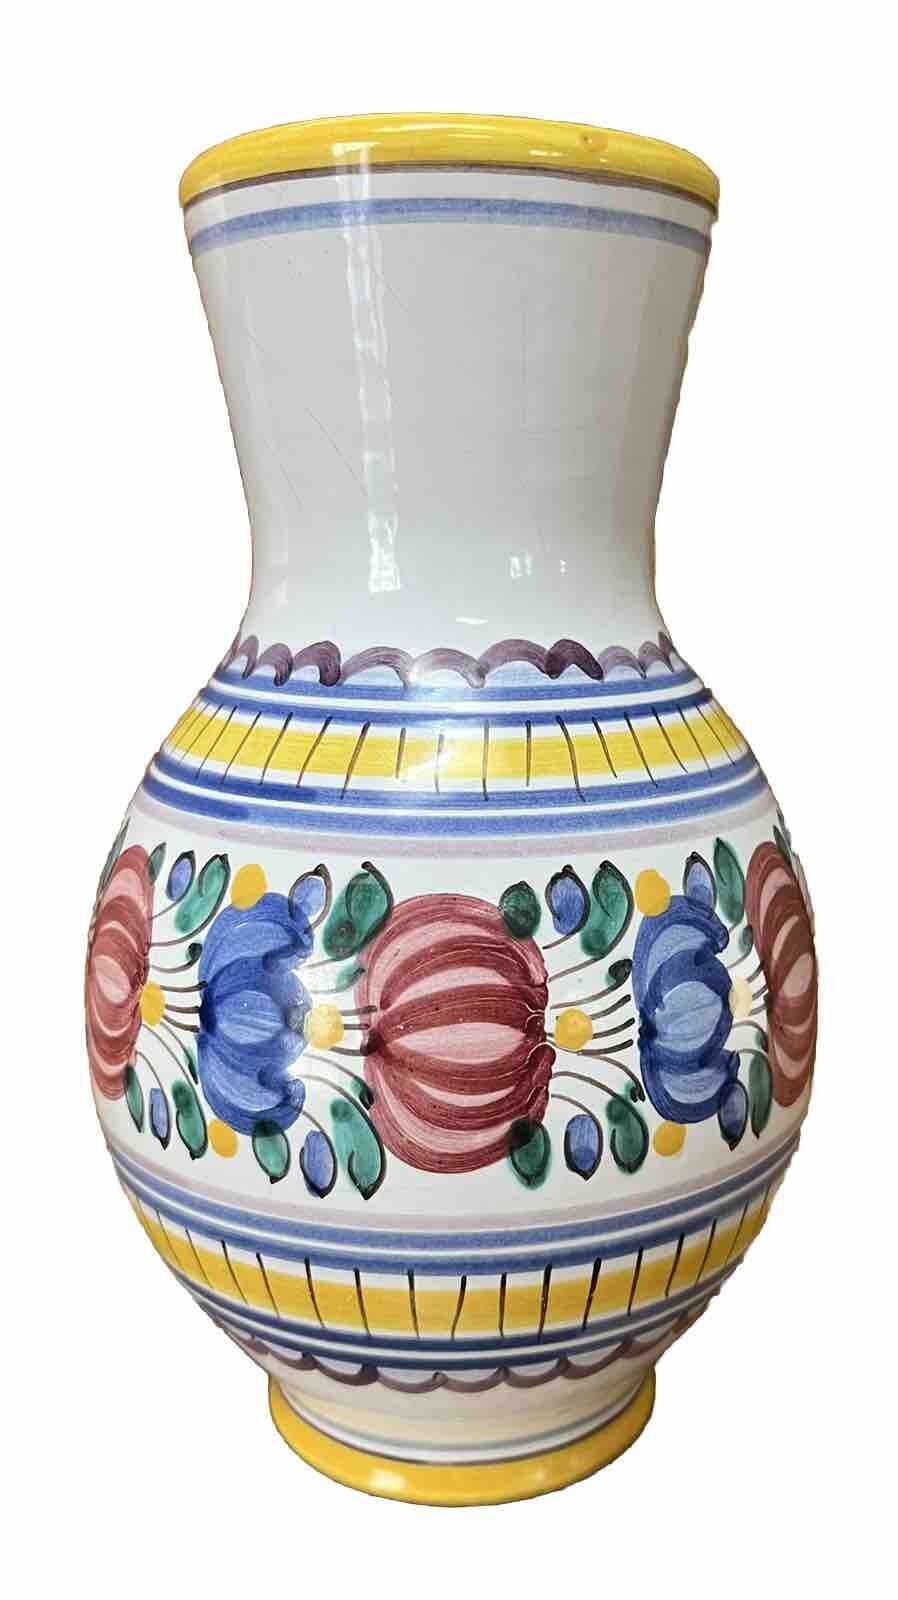 VTG Czechoslovakian Modra Ceramic Pottery Floral Vase Blues And Yellows 80’s